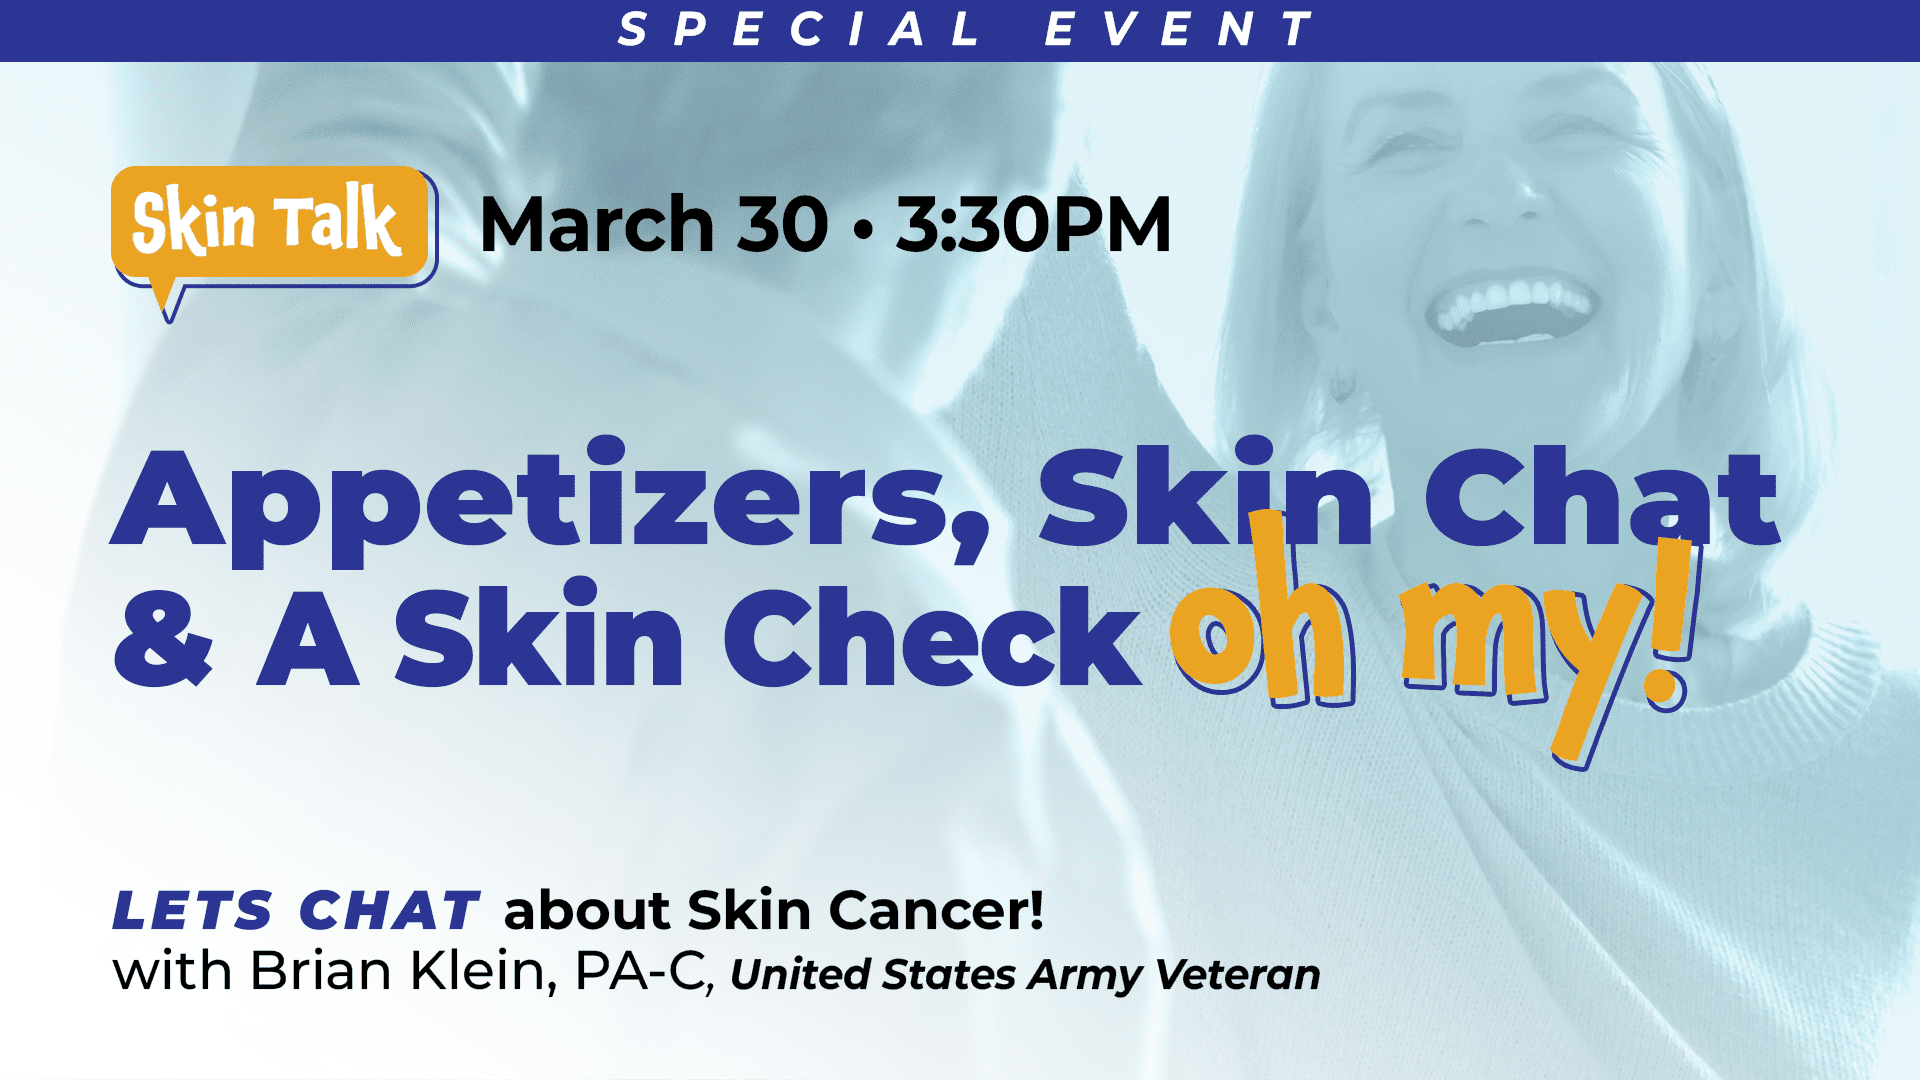 Skin Talk event at Lady Lake.